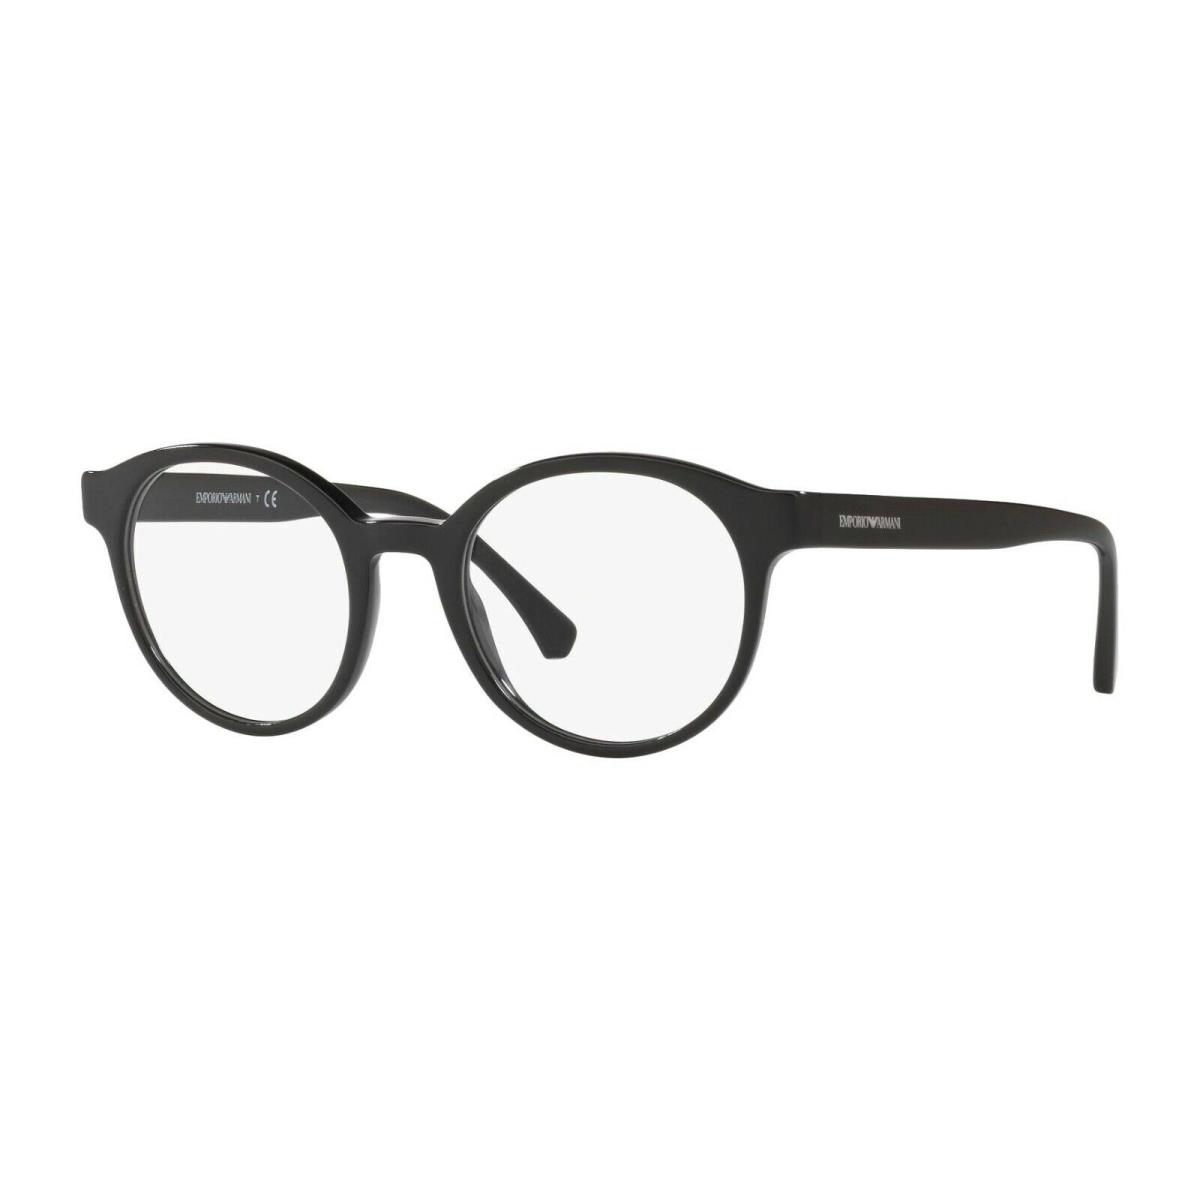 Emporio Armani Eyeglasses EA 3144 5001 Black W/ Demo Lens 50 MM